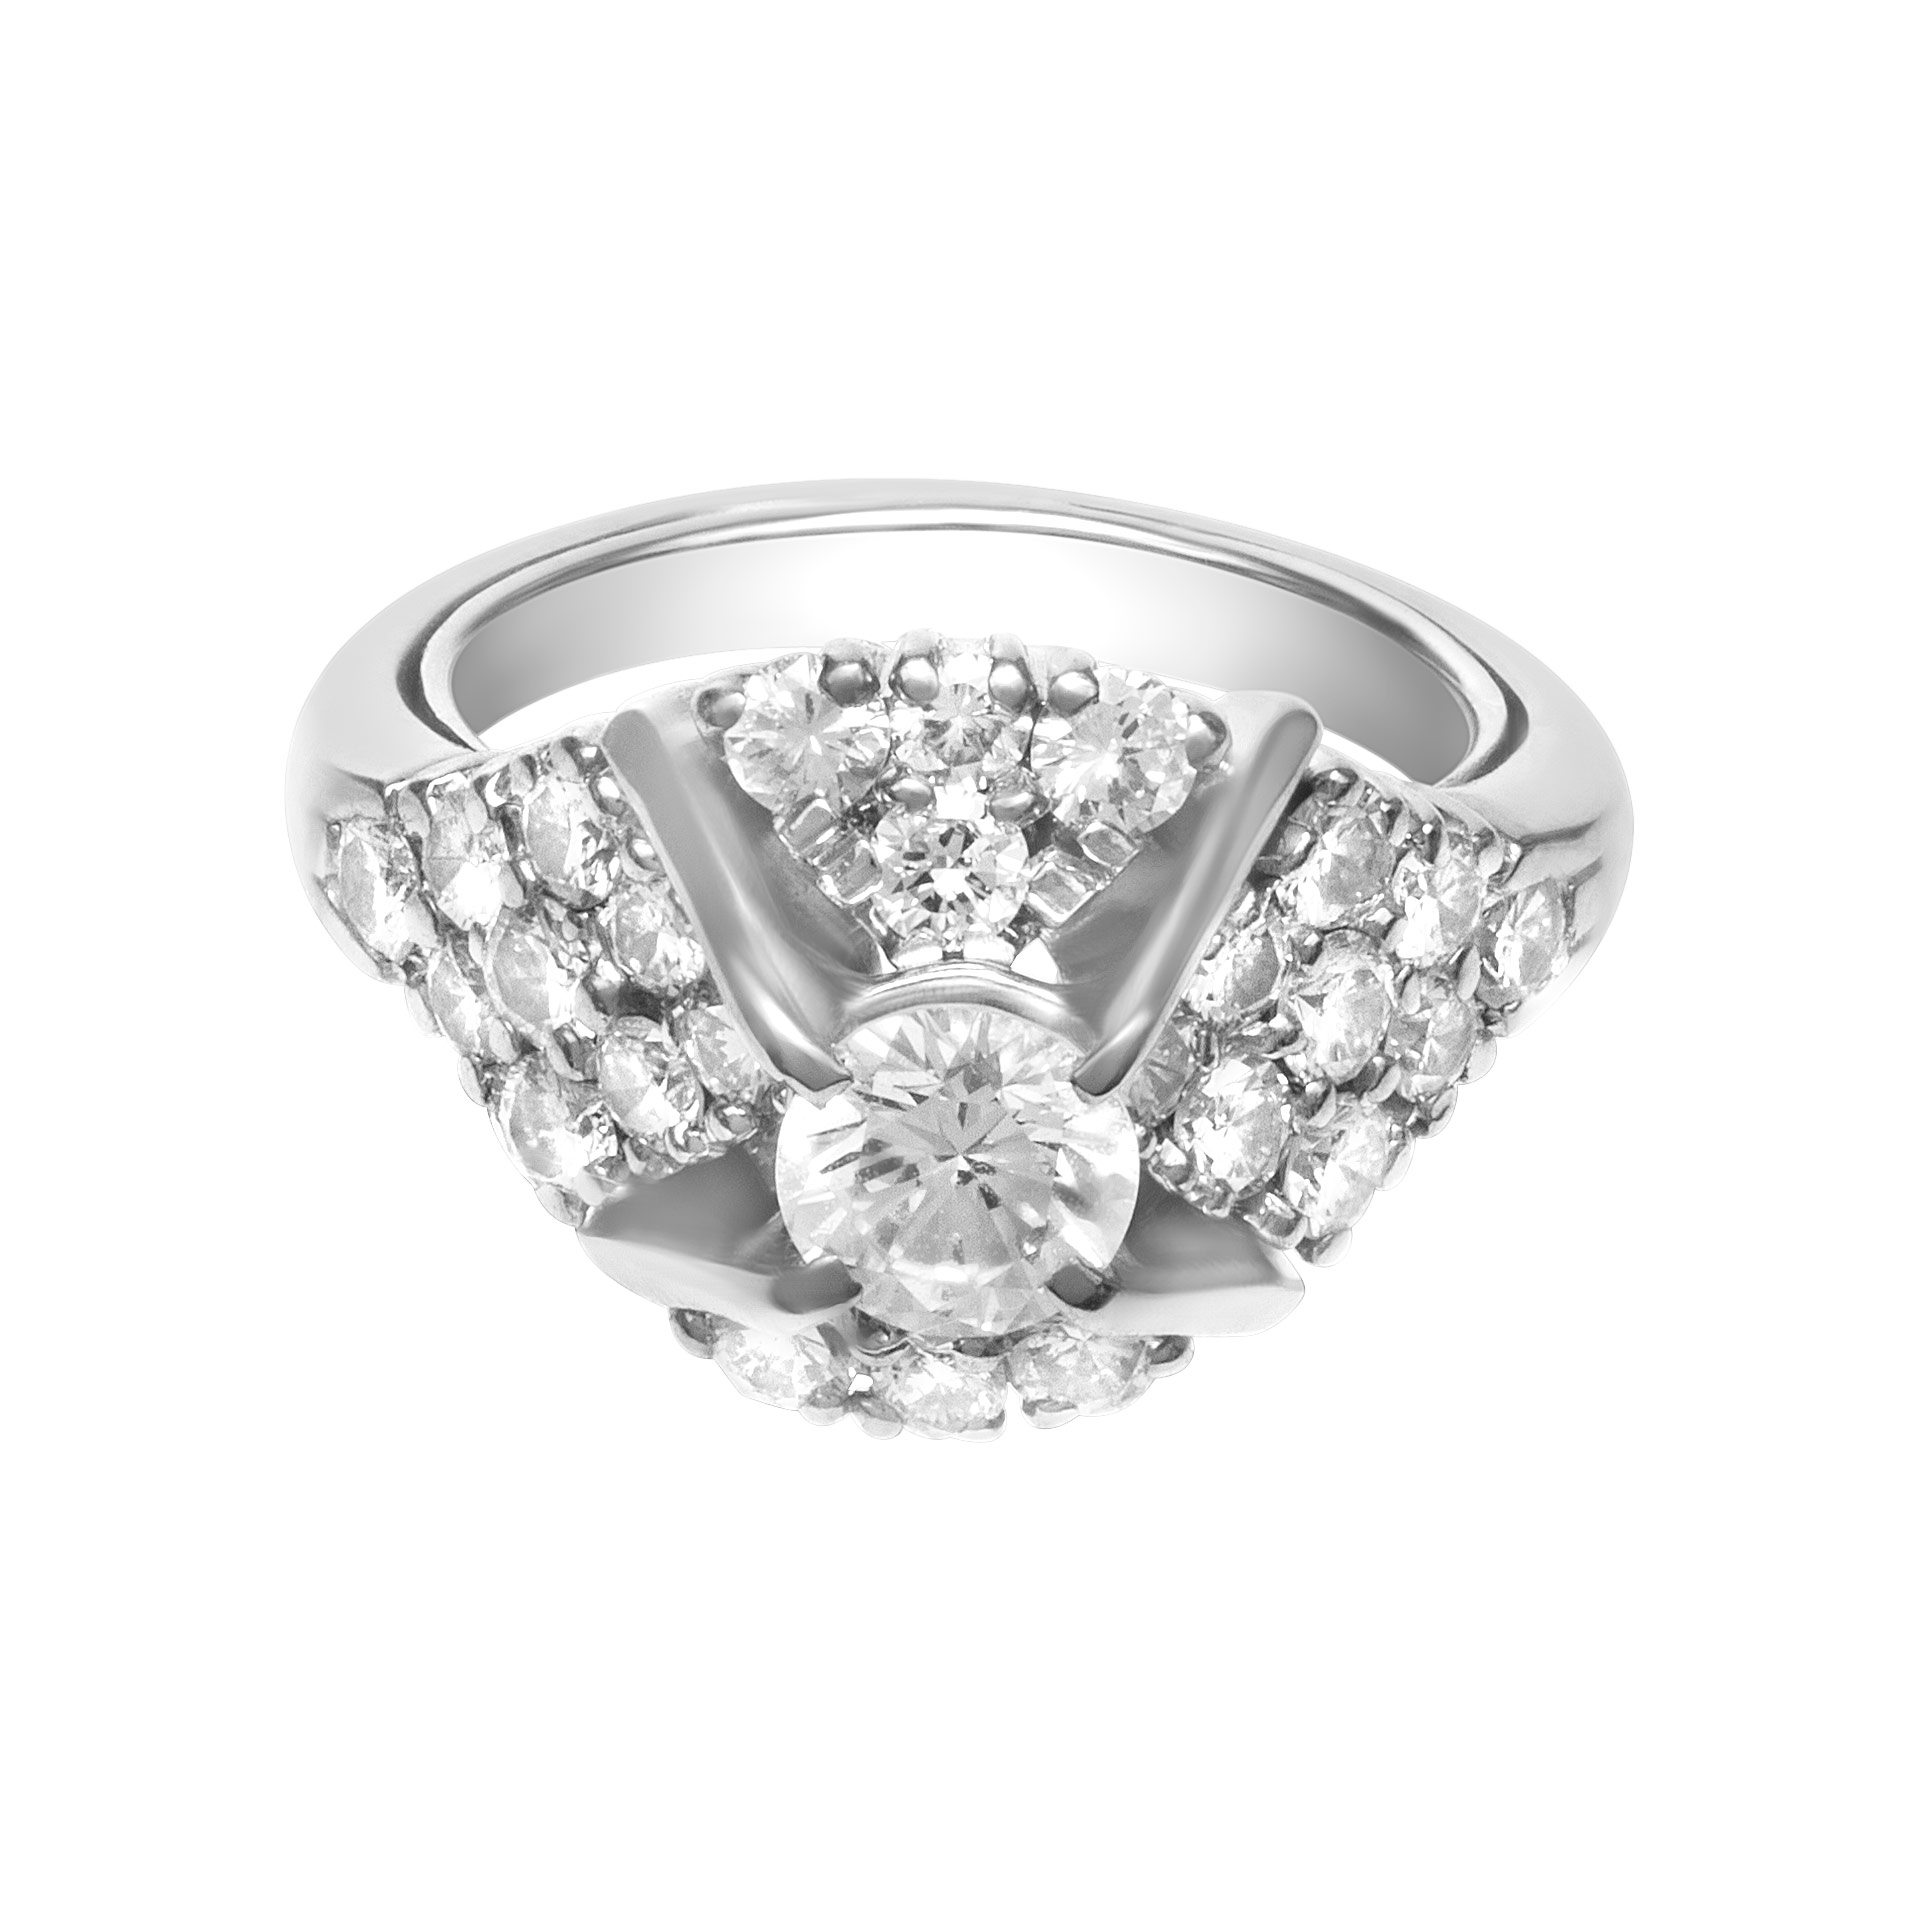 Vintage geometric diamond ring 1.00 carat in diamonds set in platinum.